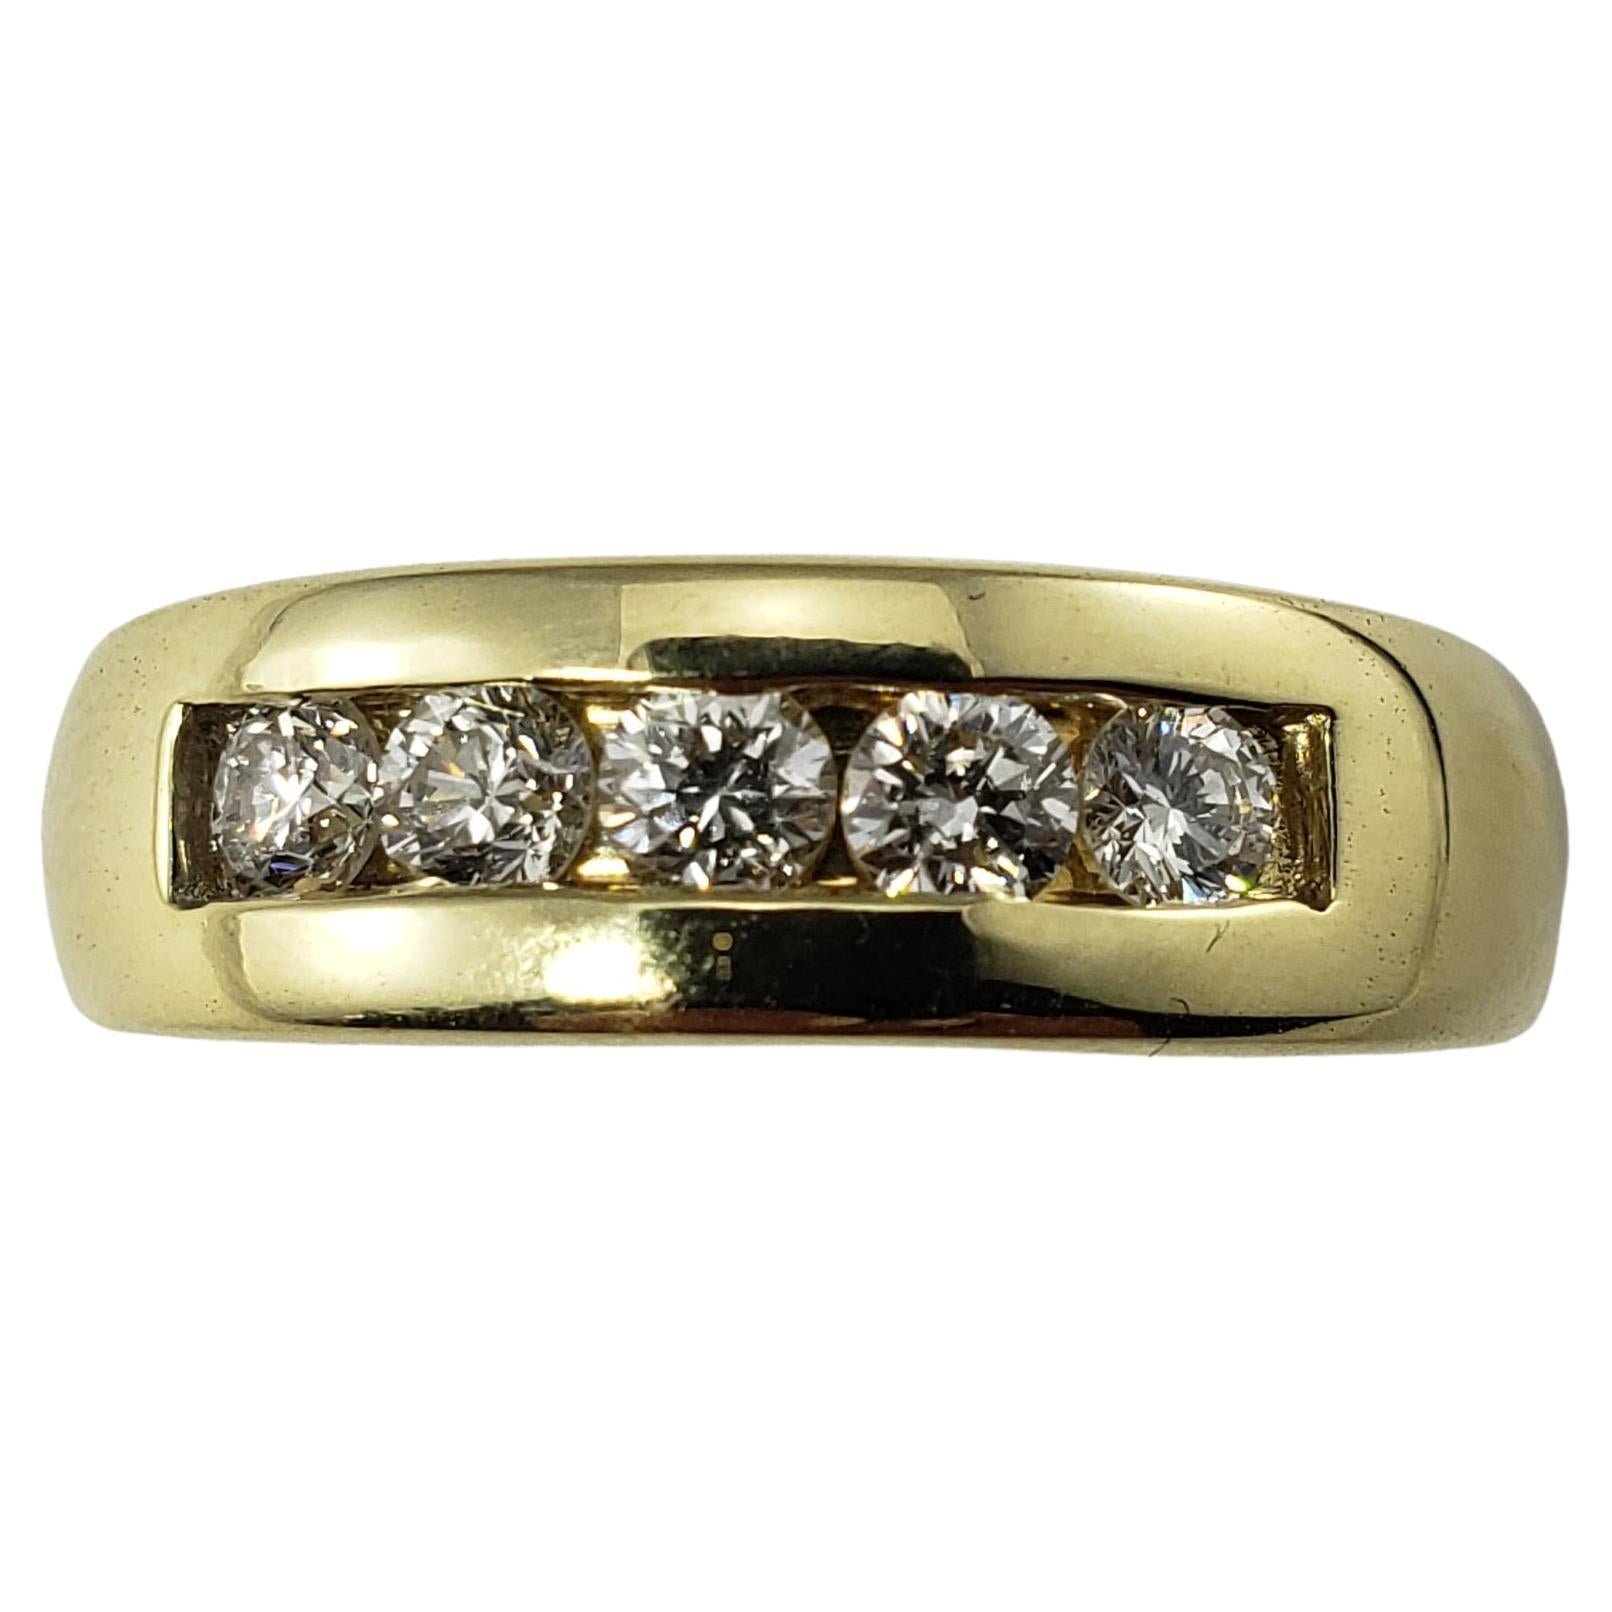 14 Karat Yellow Gold and Diamond Band Ring